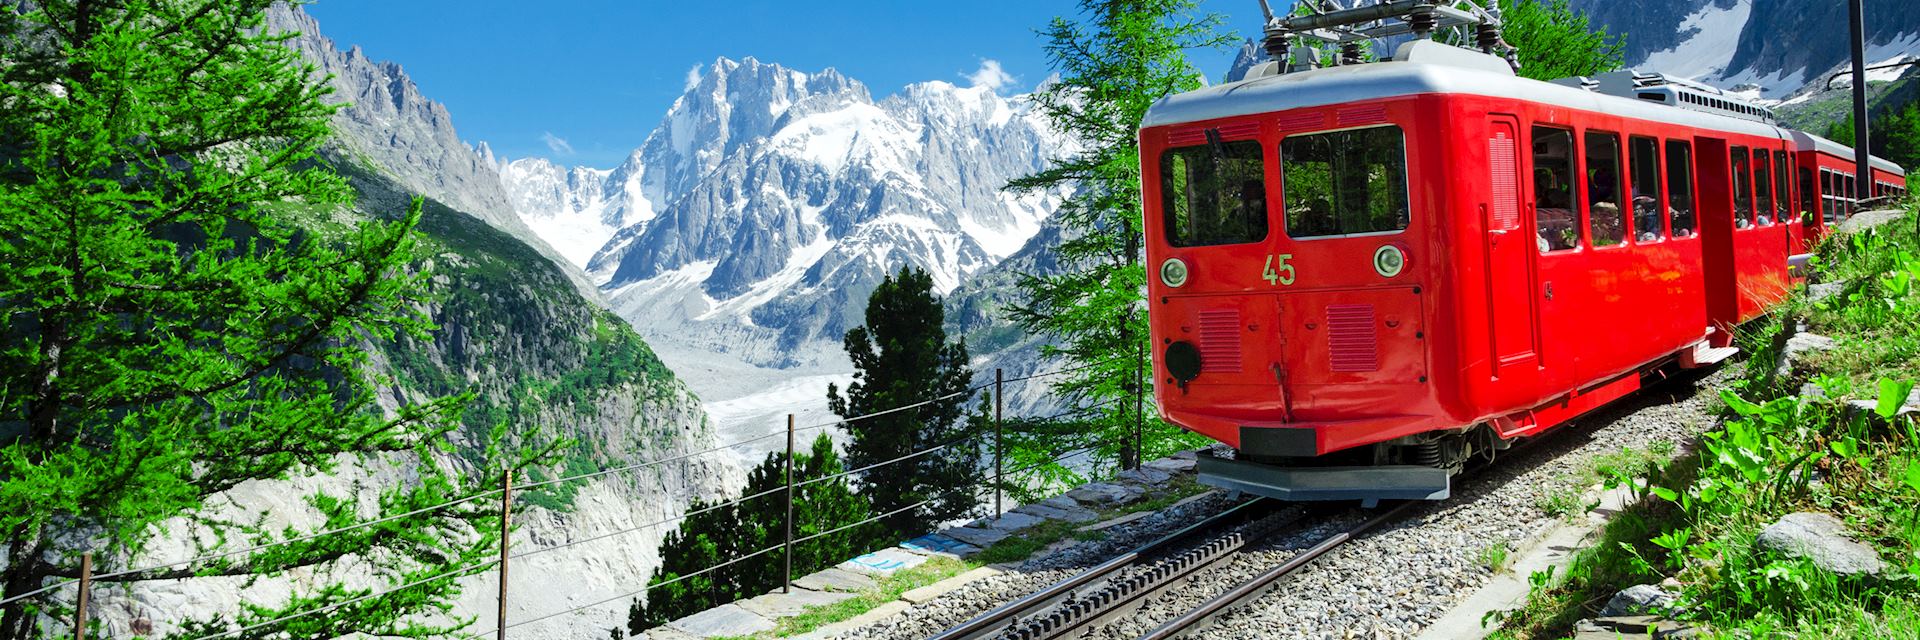 Cog railway in Chamonix, France